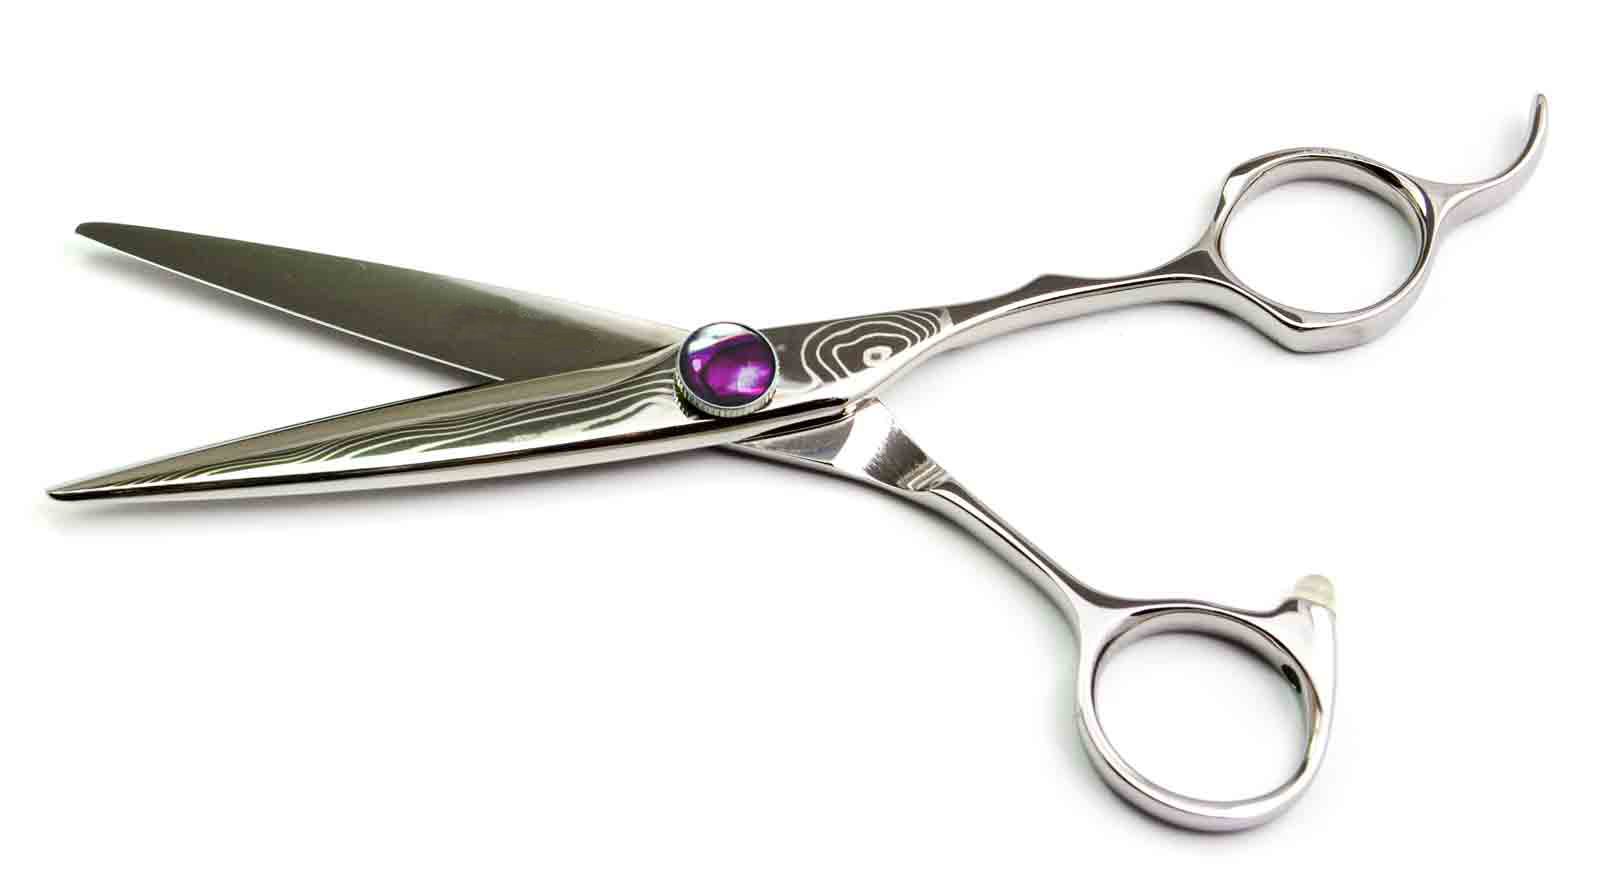 wallpaper scissors,scissors,hair shear,cutting tool,office supplies,fashion accessory